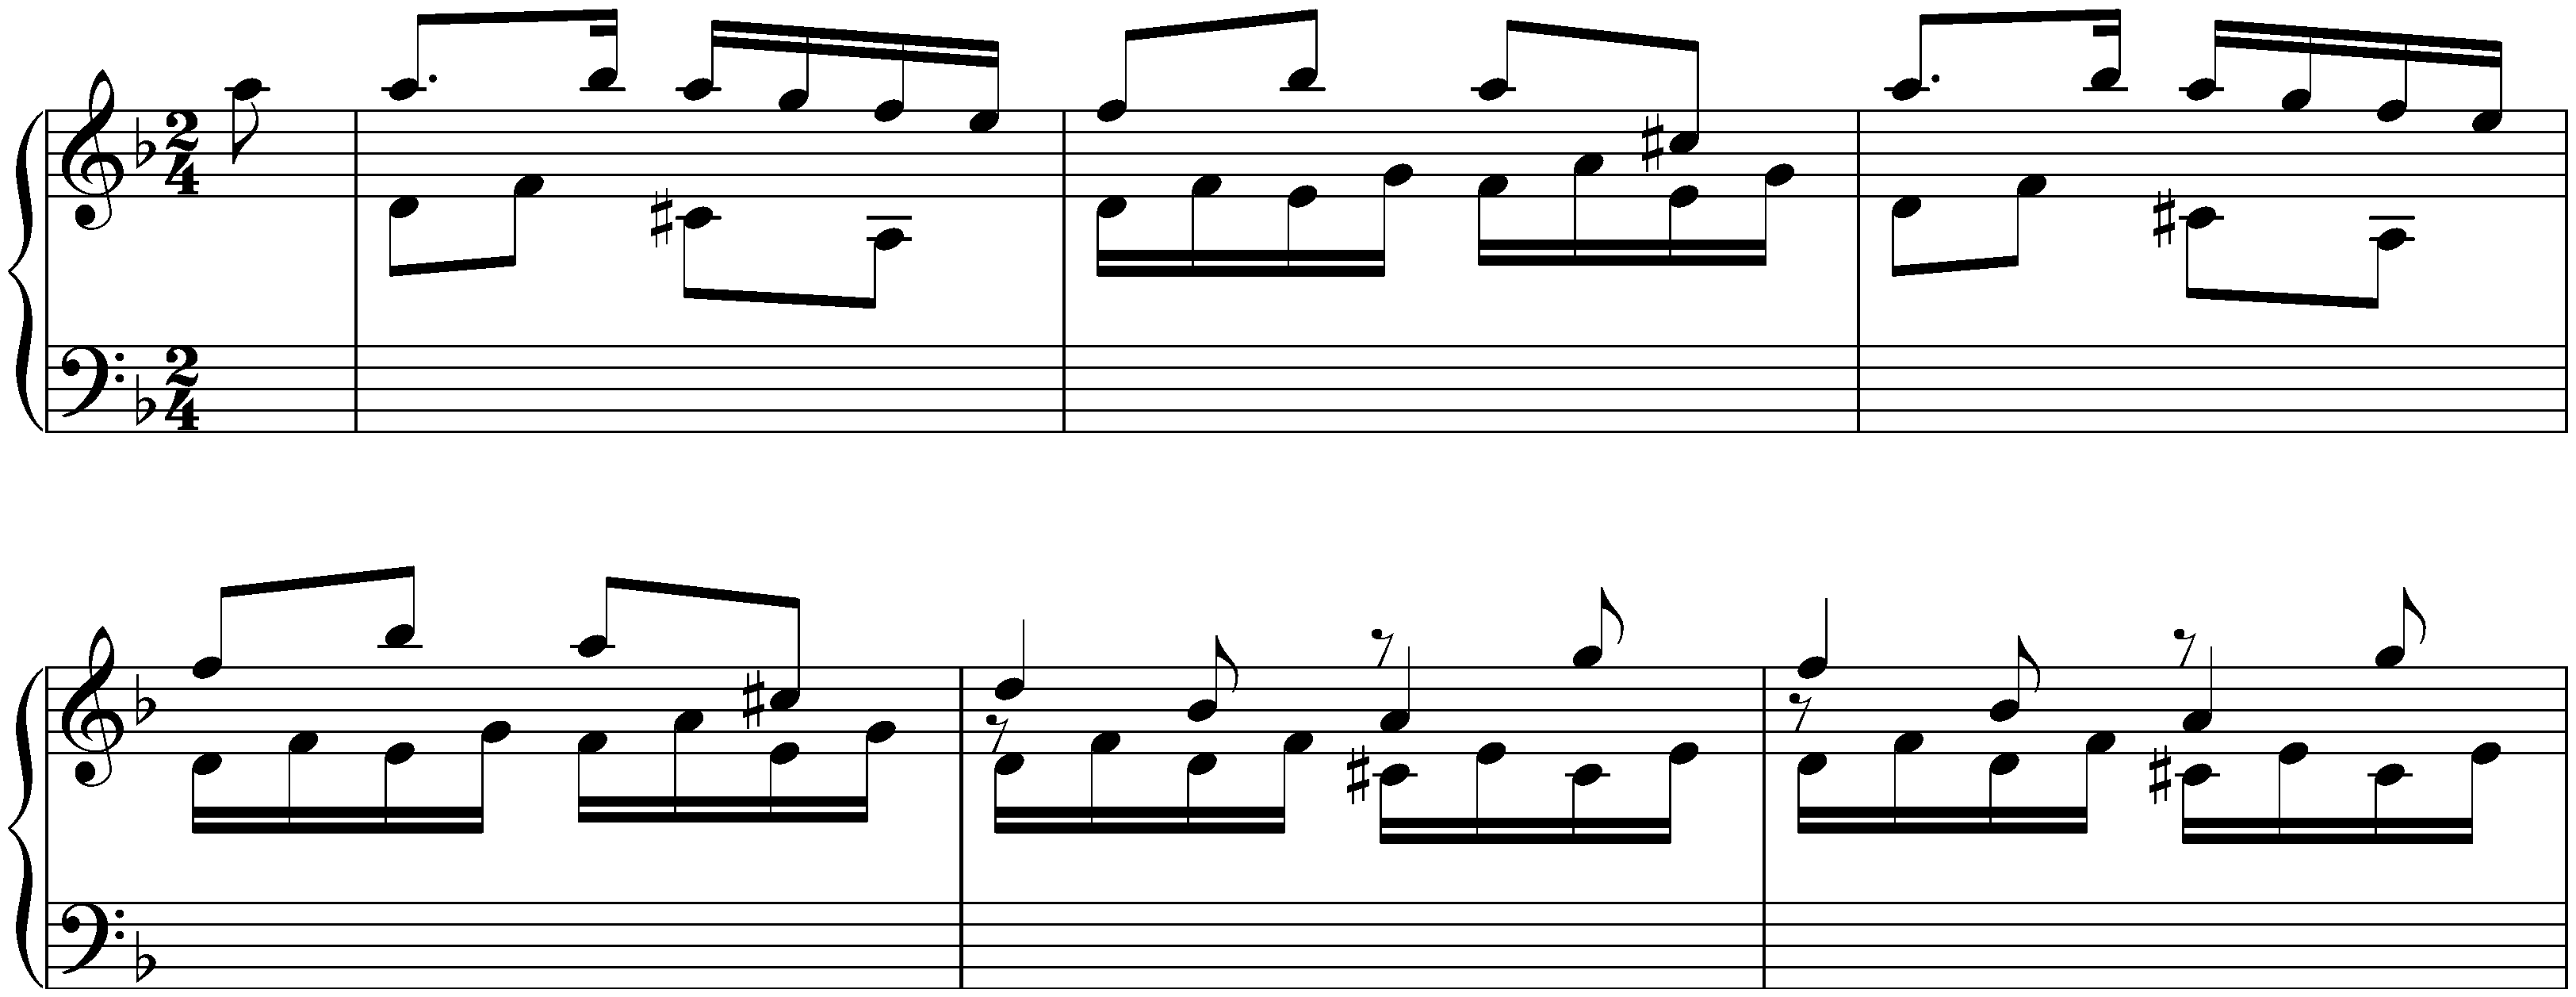 Sonatas found in New York; 4. D minor